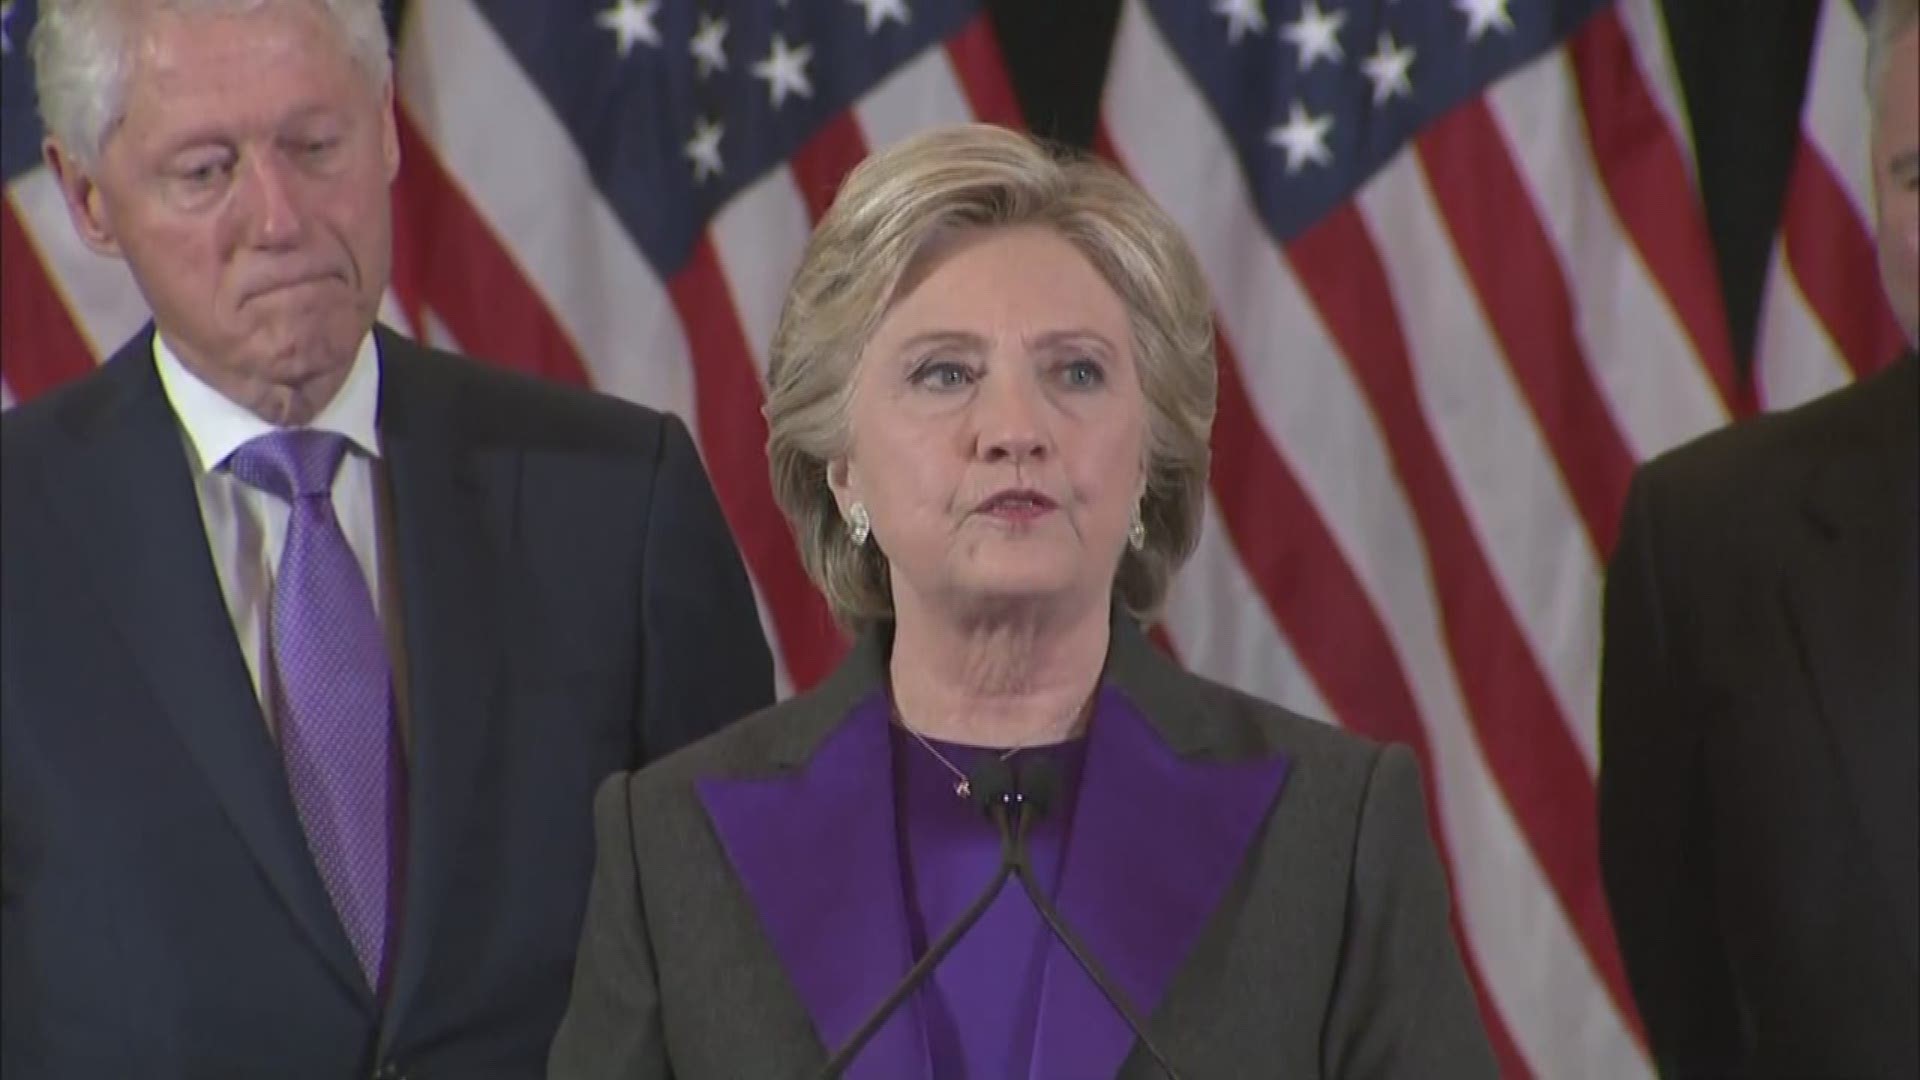 Hillary Clinton Concession Speech